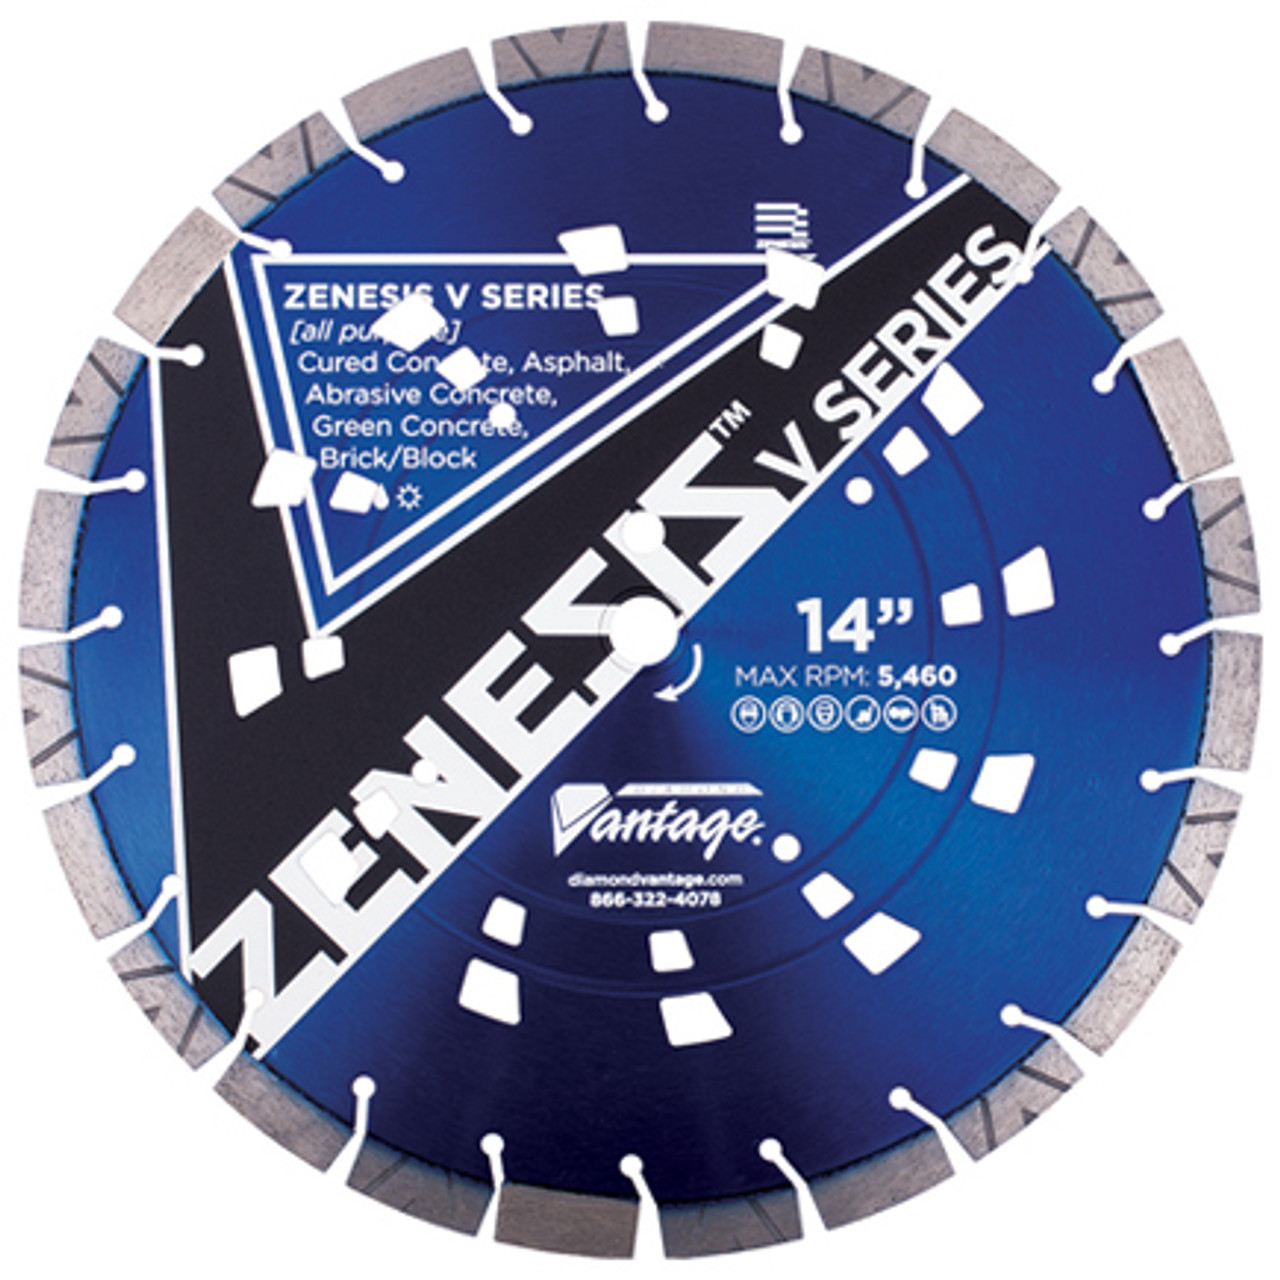 Diamond Vantage ZENESIS V SERIES 18 x .125 x 1/20mm All-Purpose, ZENESIS V